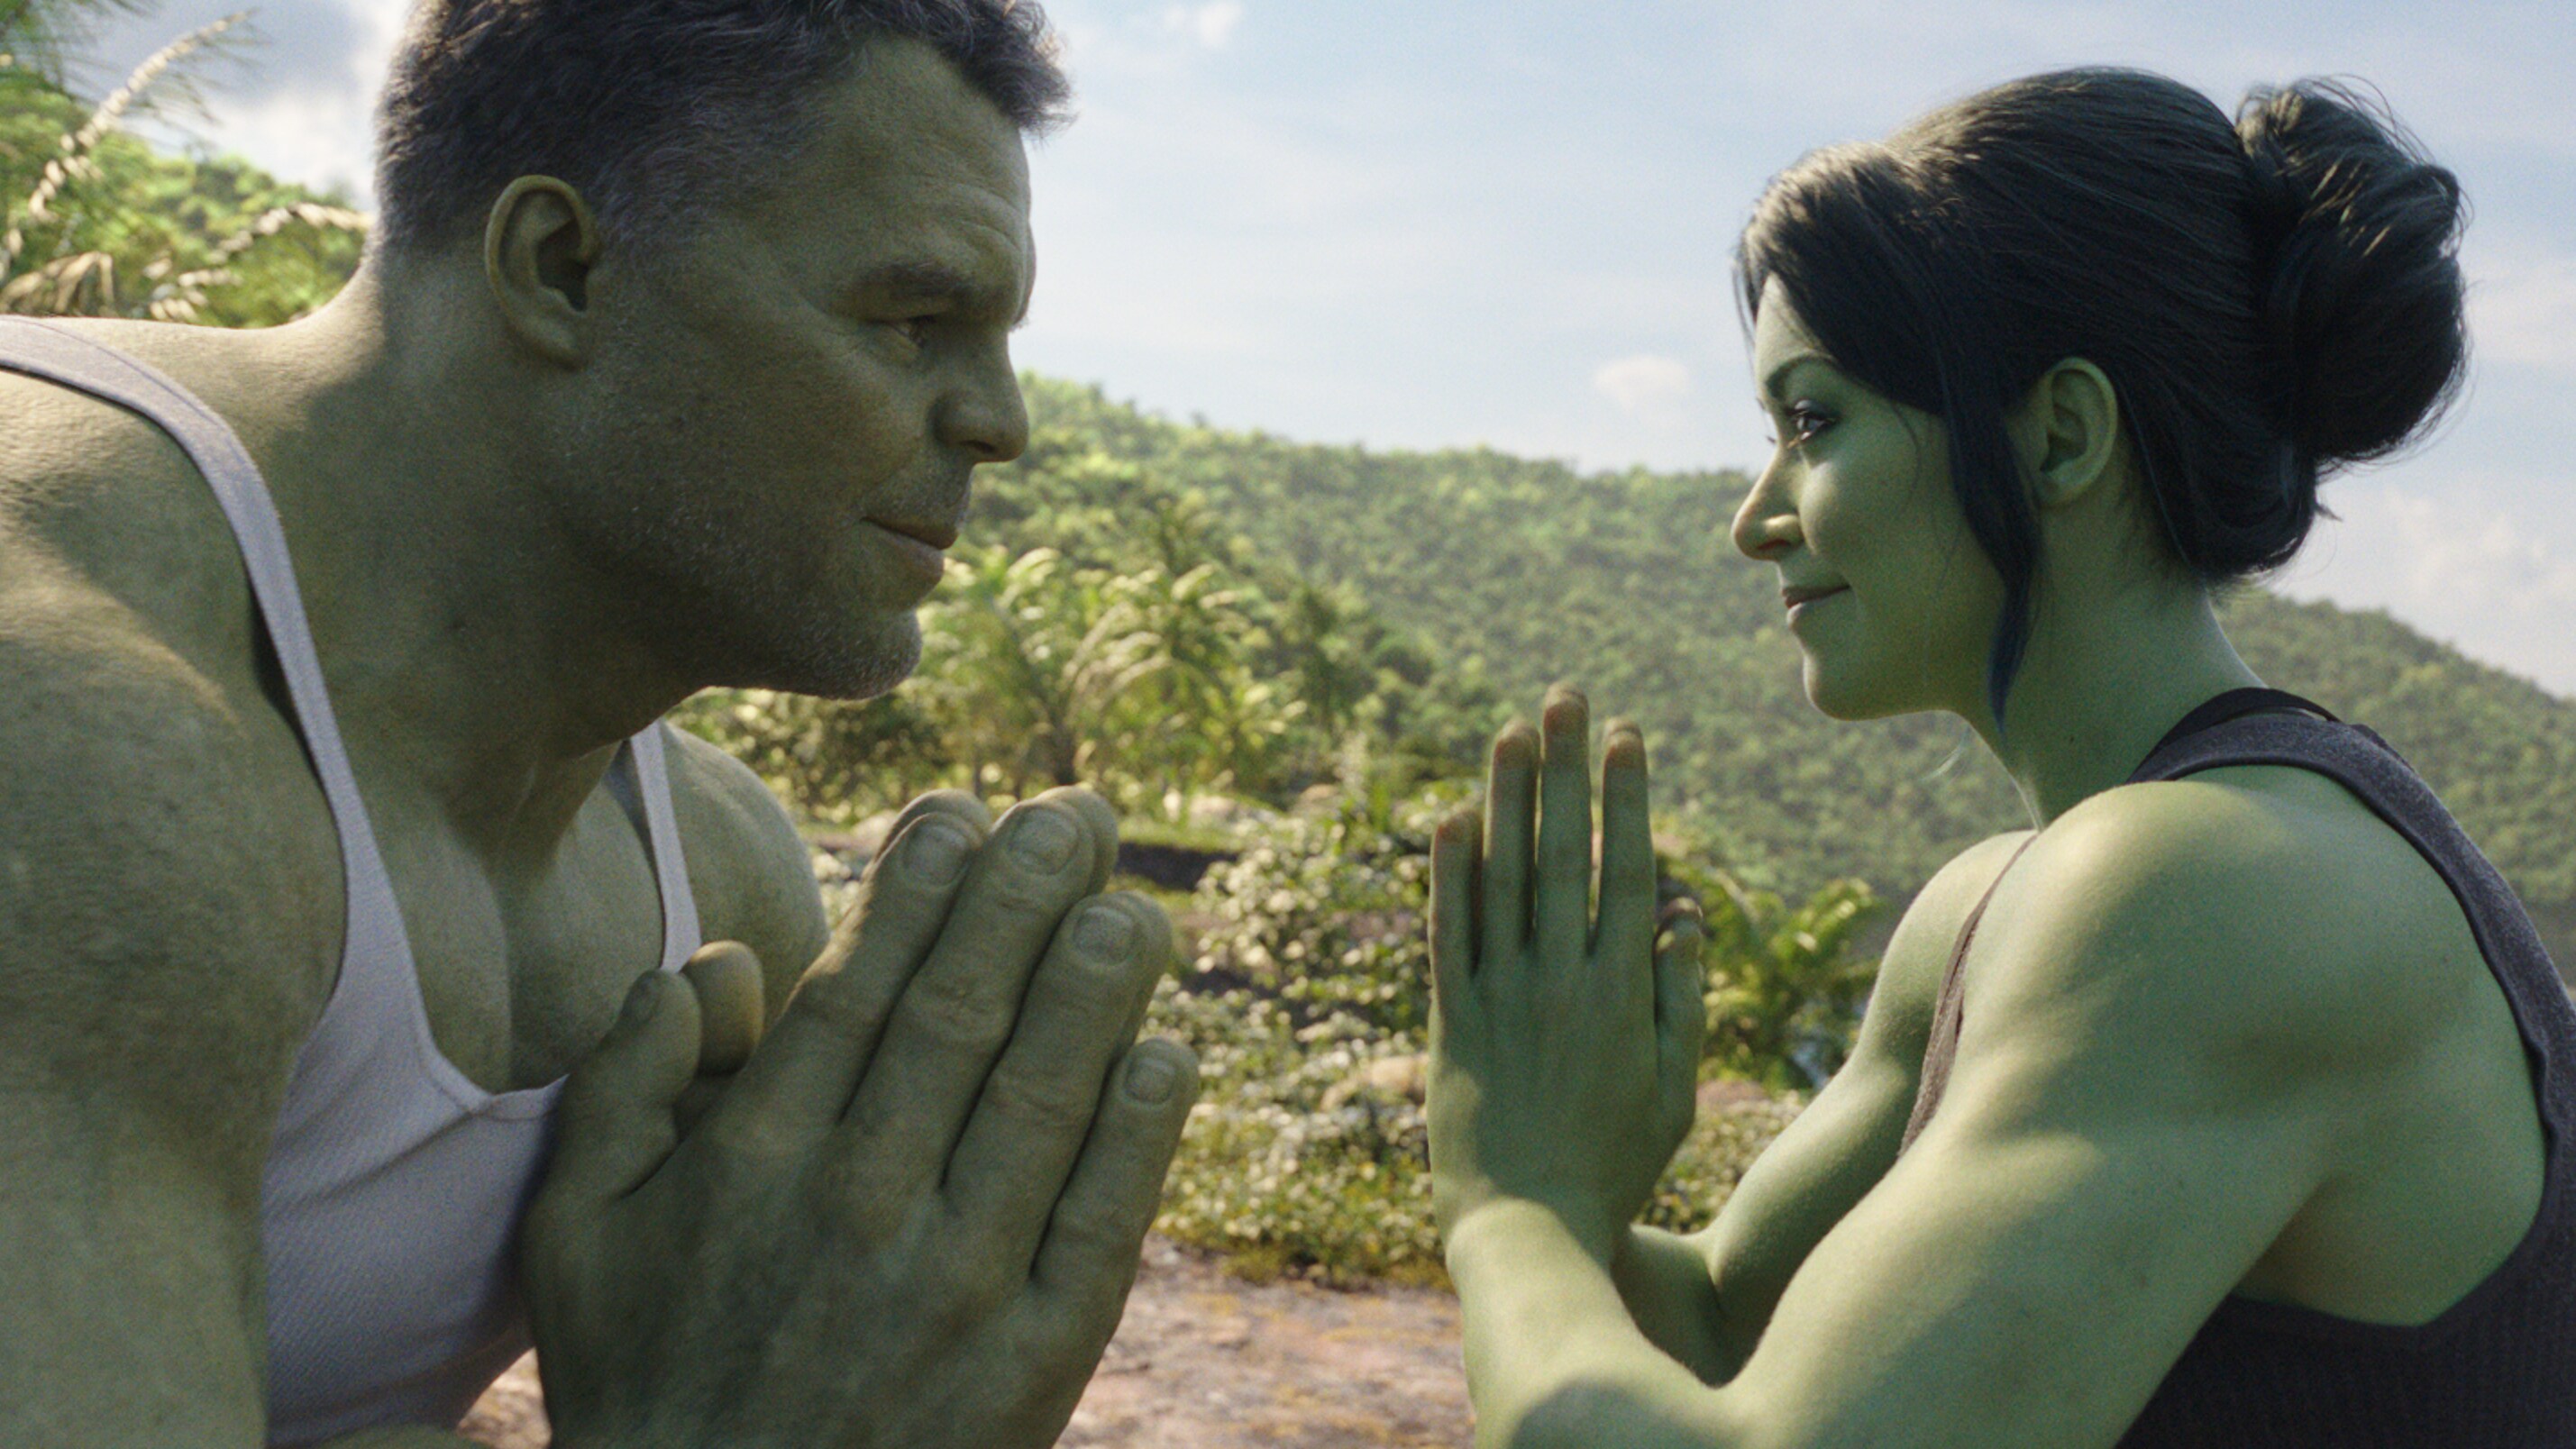 Hulk and She-Hulk facing each other.